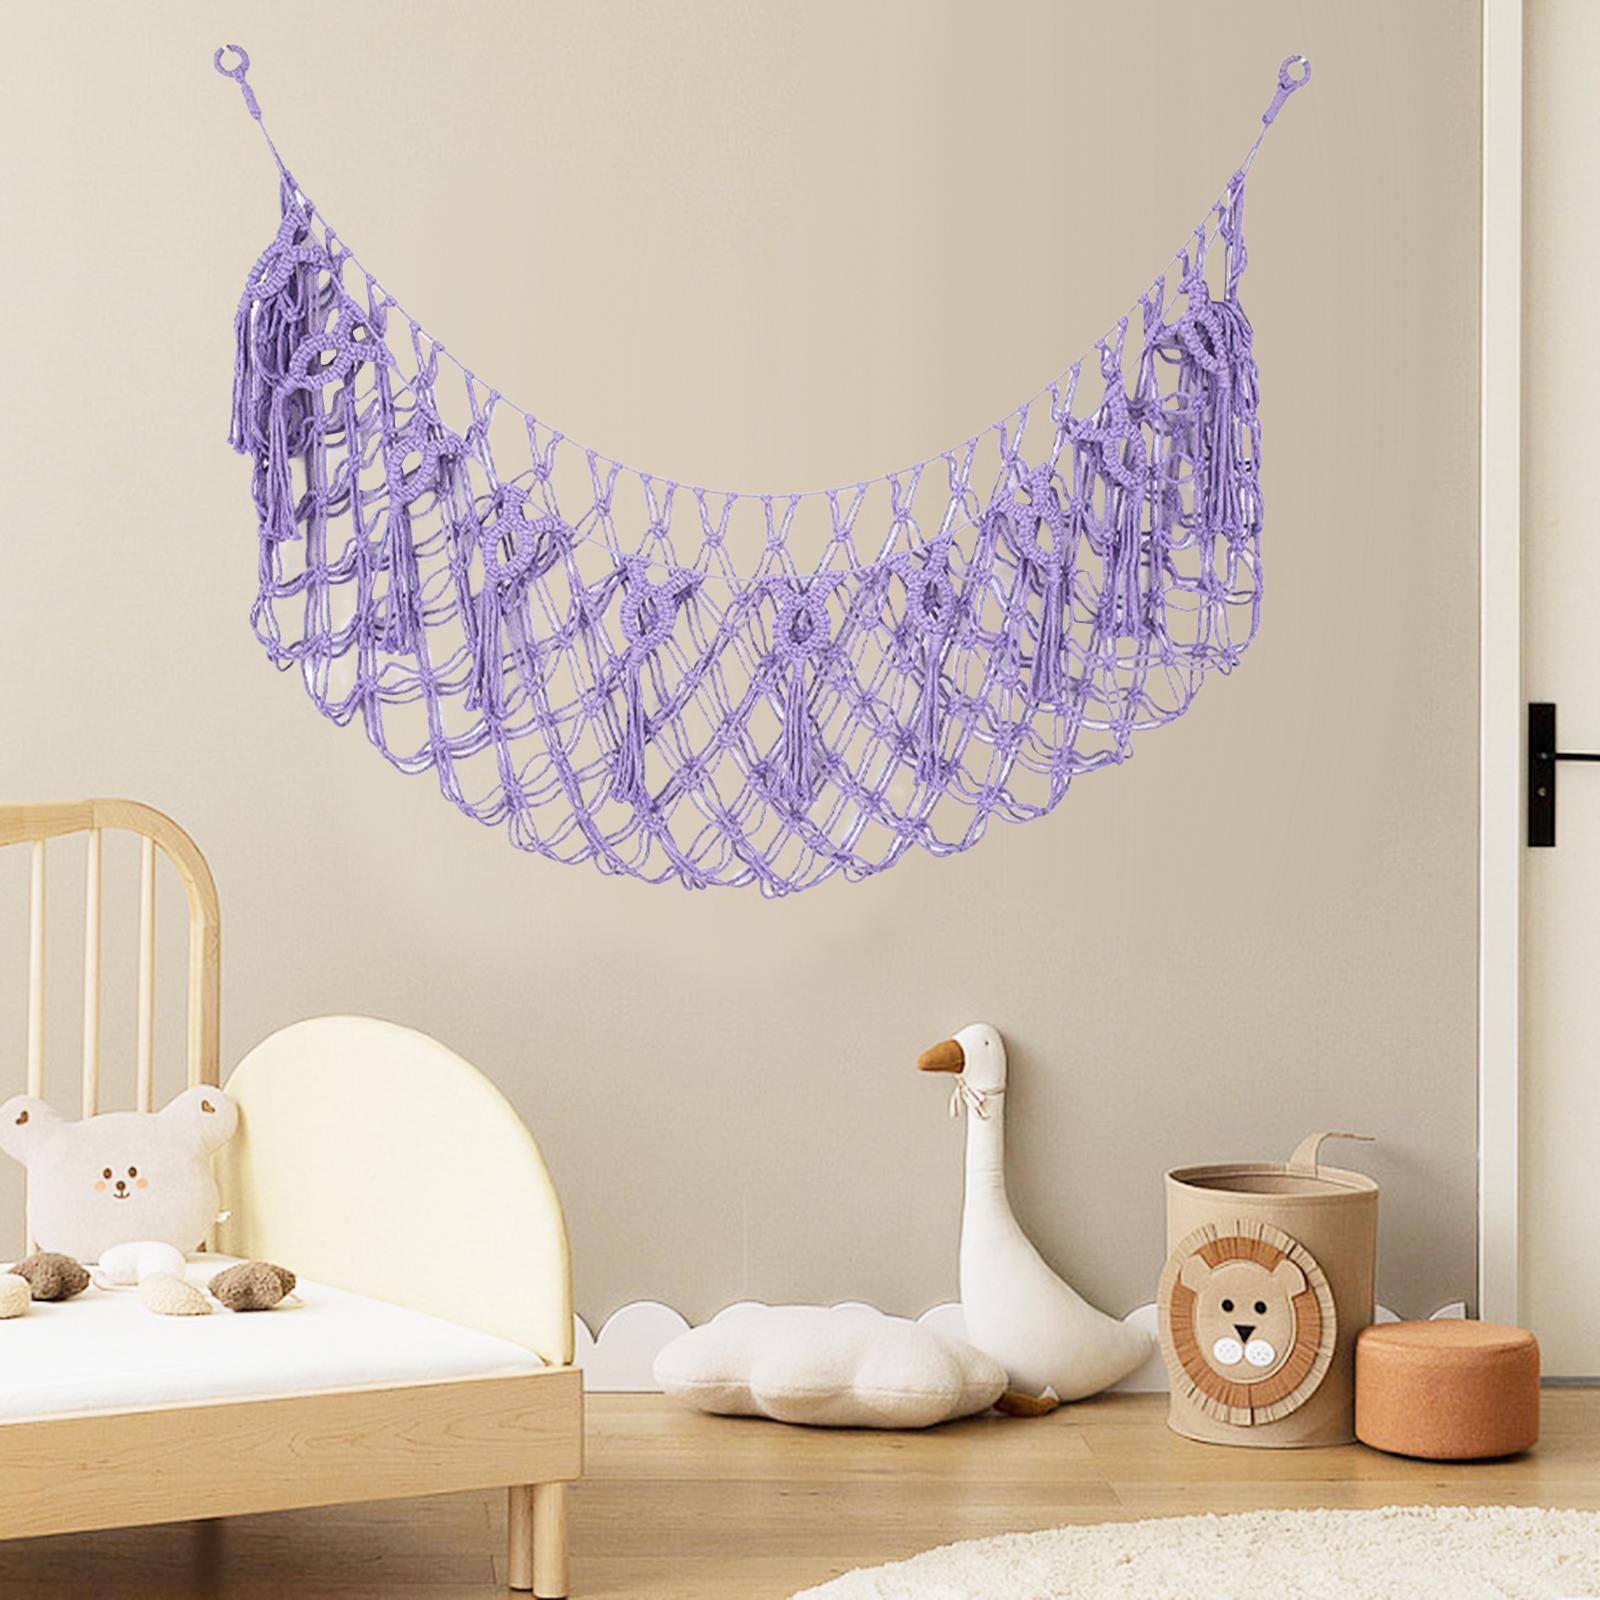 Soft Toy Net Hammock Woven Rope Home Decor Handmade Hanging Net for Playroom Purple